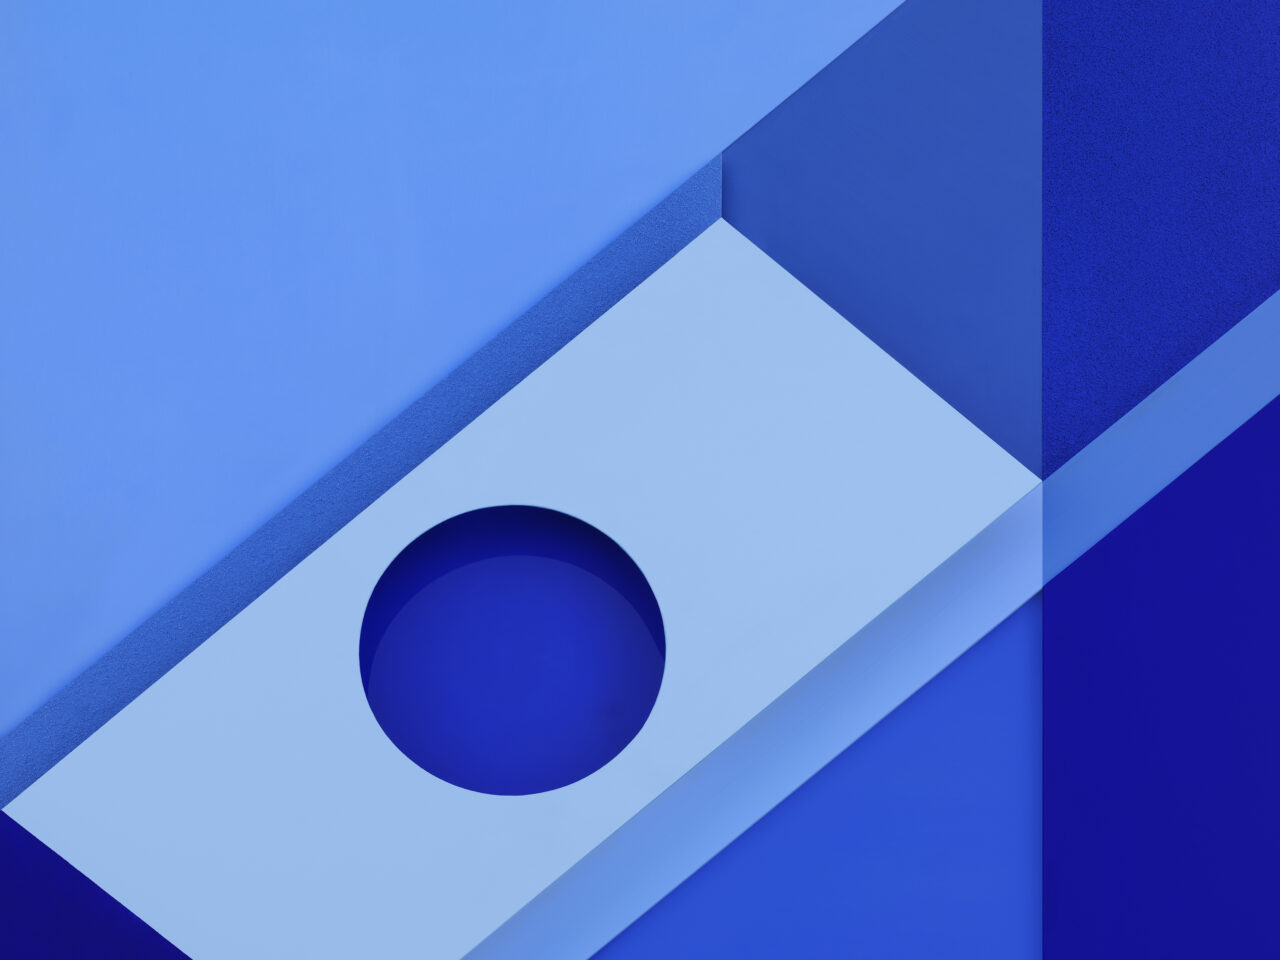 Google Android 6 0 Marshmallow の新たな壁紙2枚を公開